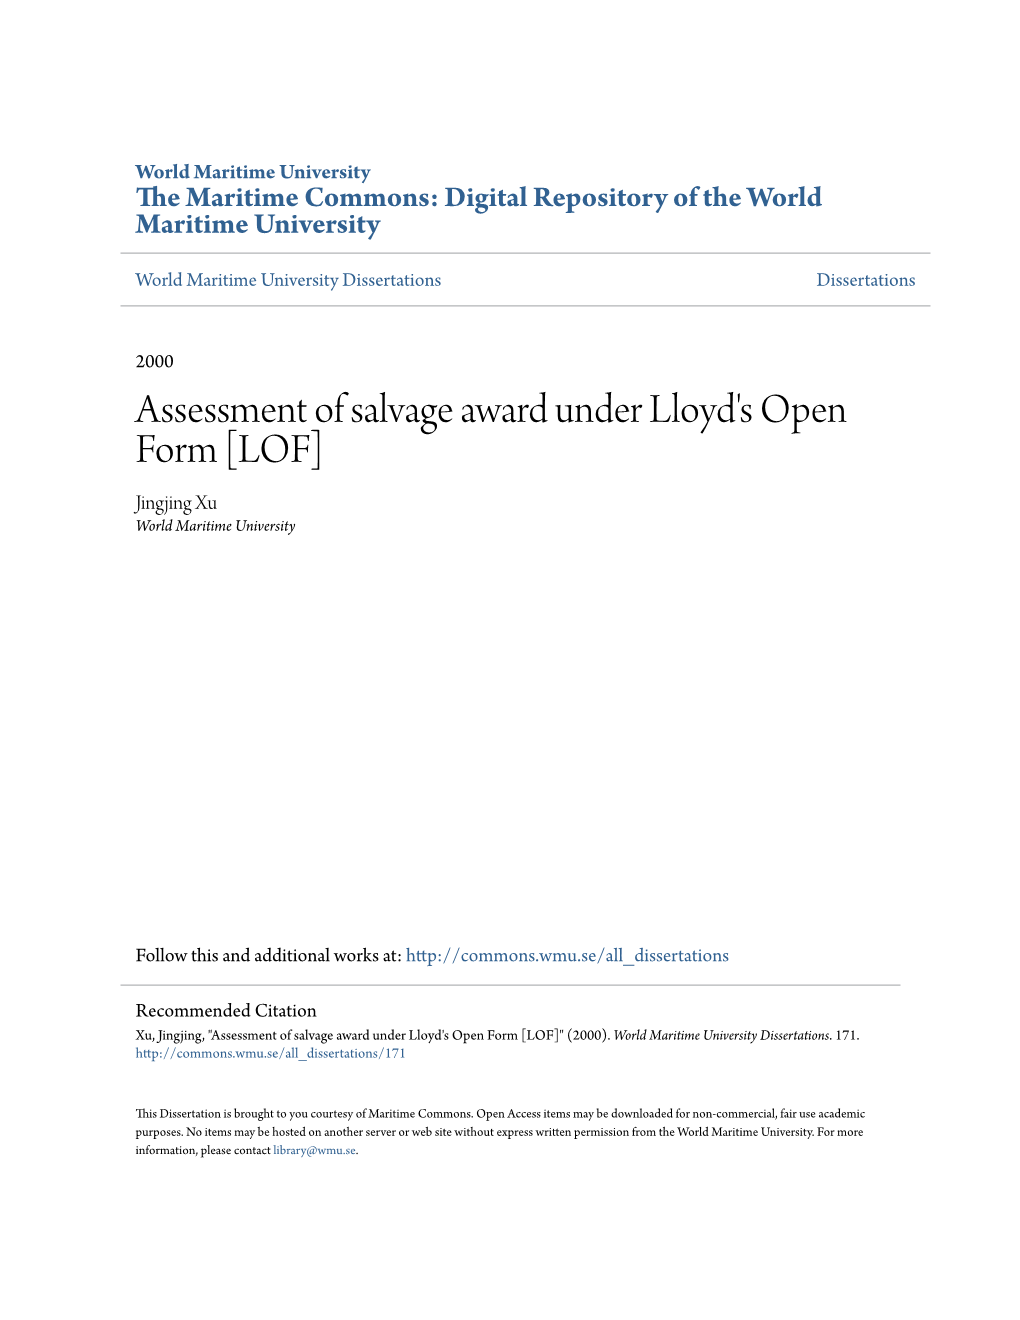 Assessment of Salvage Award Under Lloyd's Open Form [LOF] Jingjing Xu World Maritime University